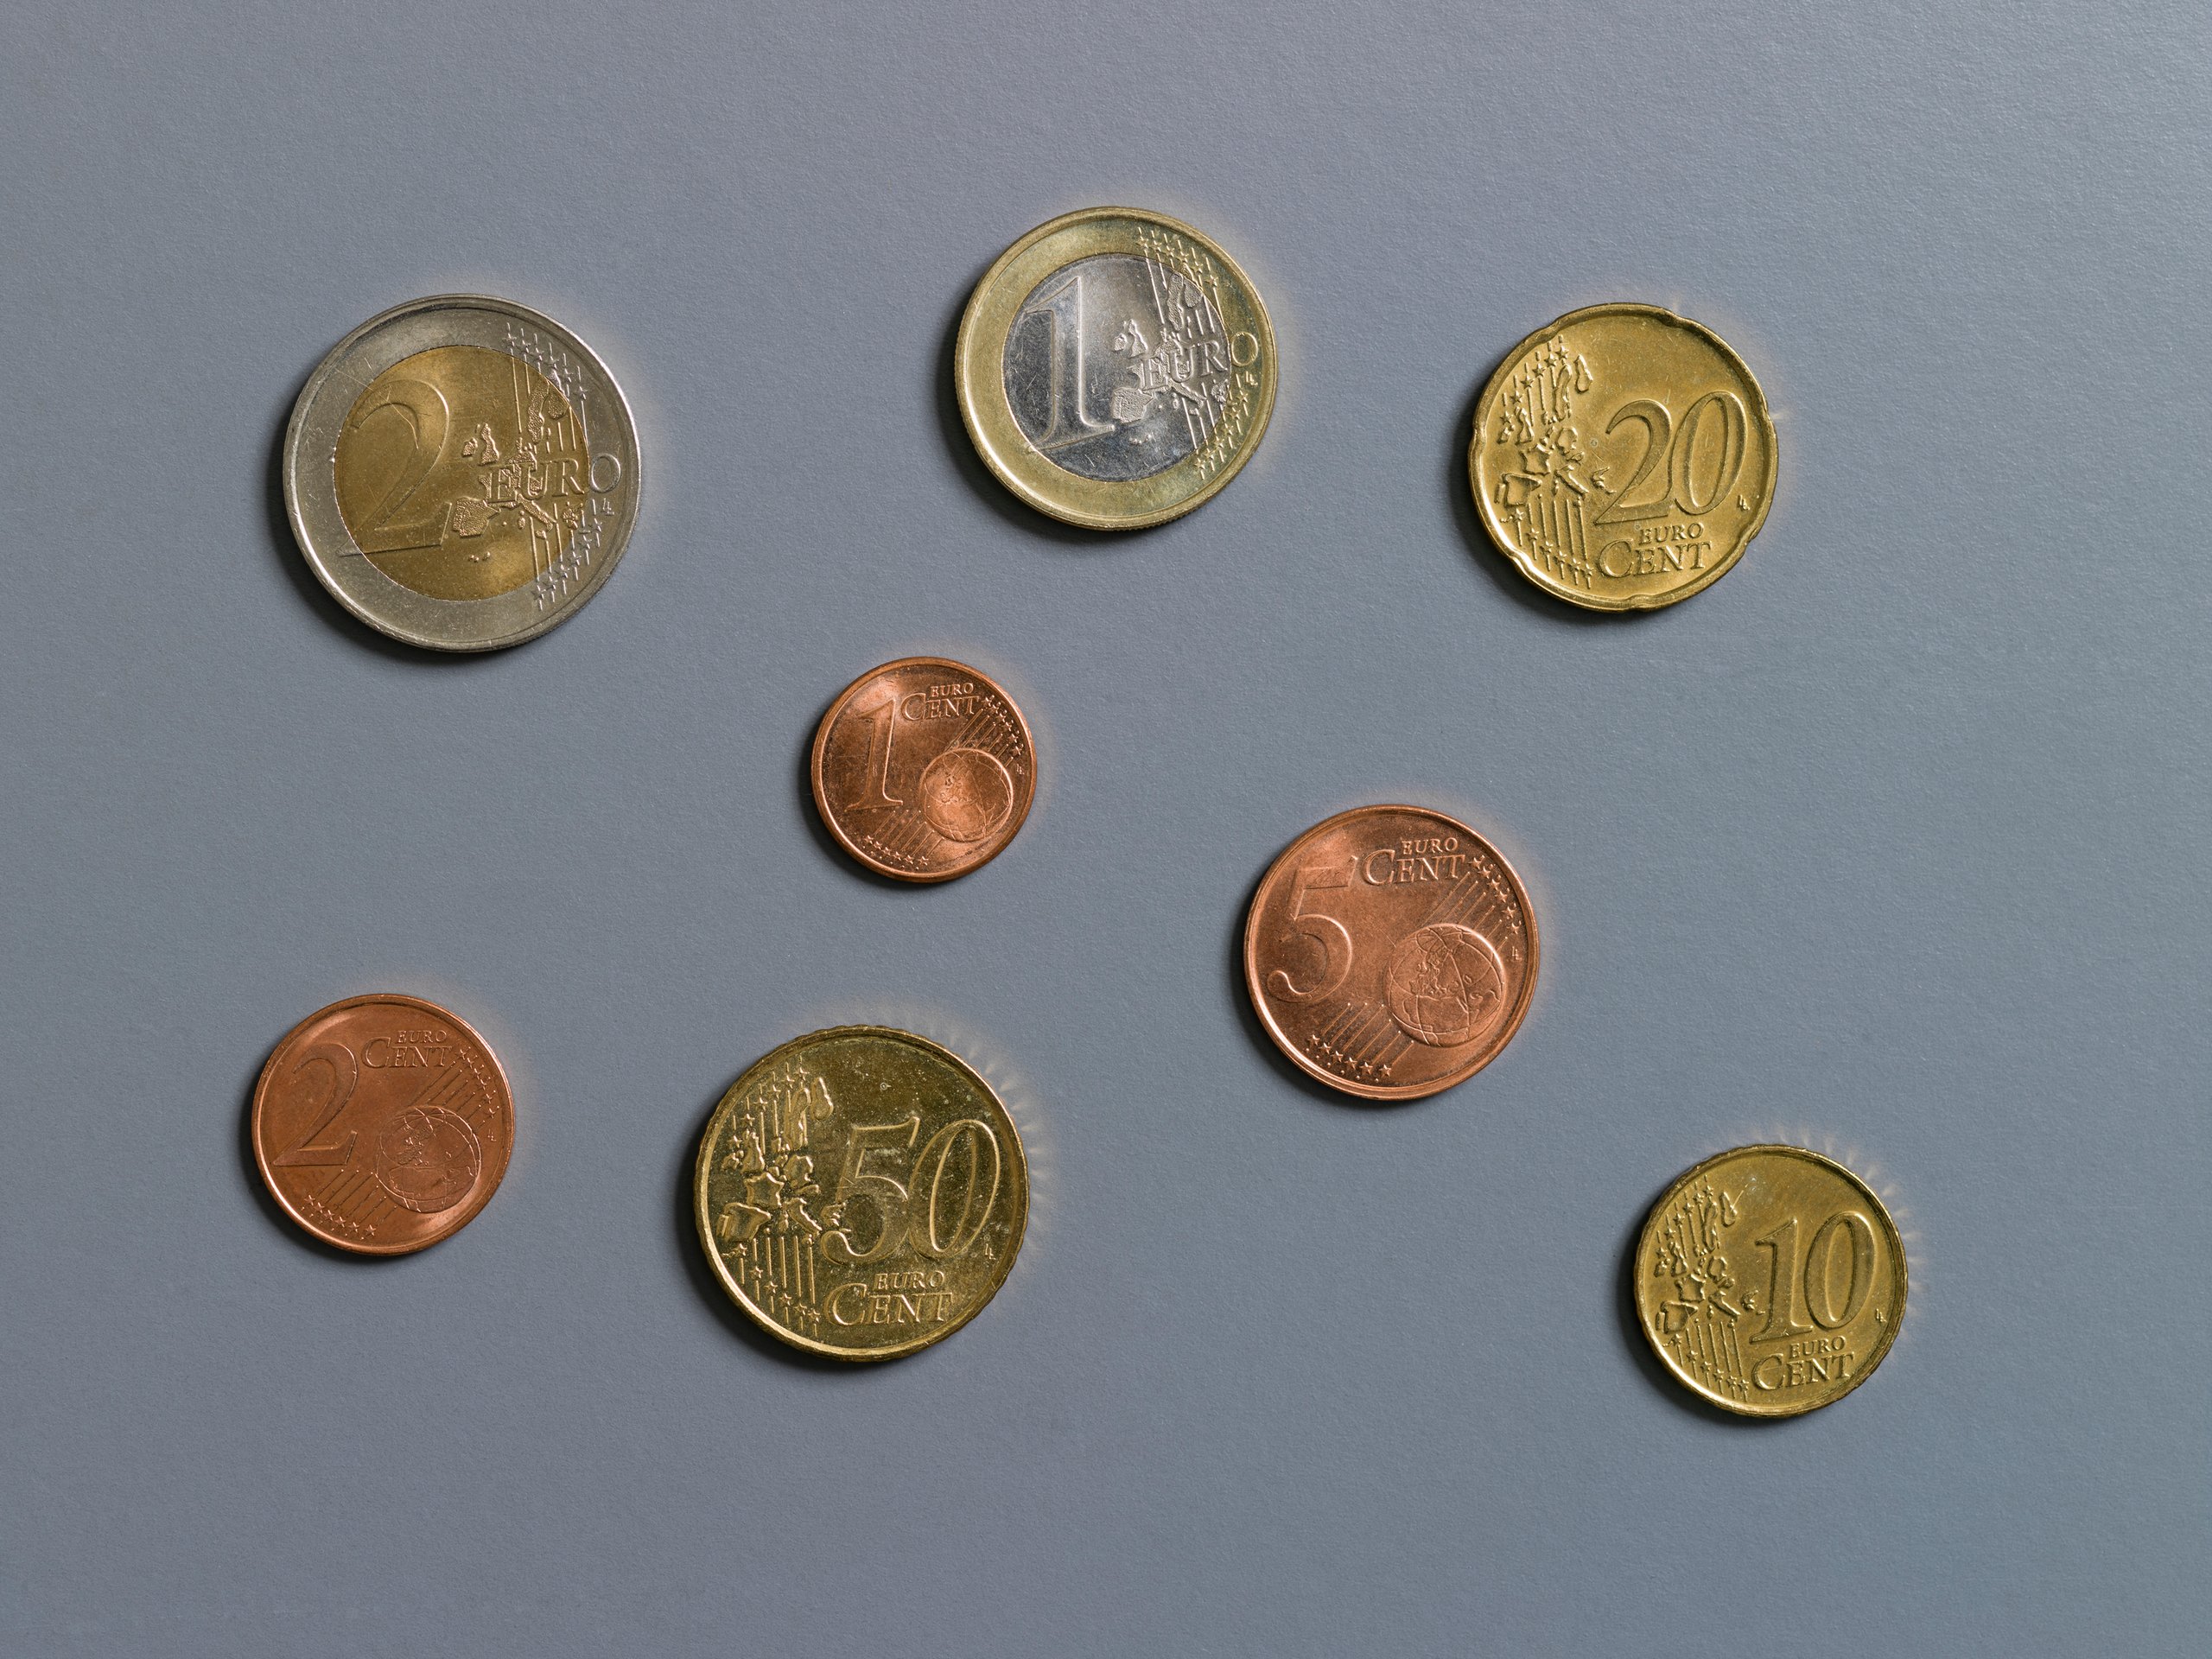 Powerhouse Collection - Euros and Euro cents coins